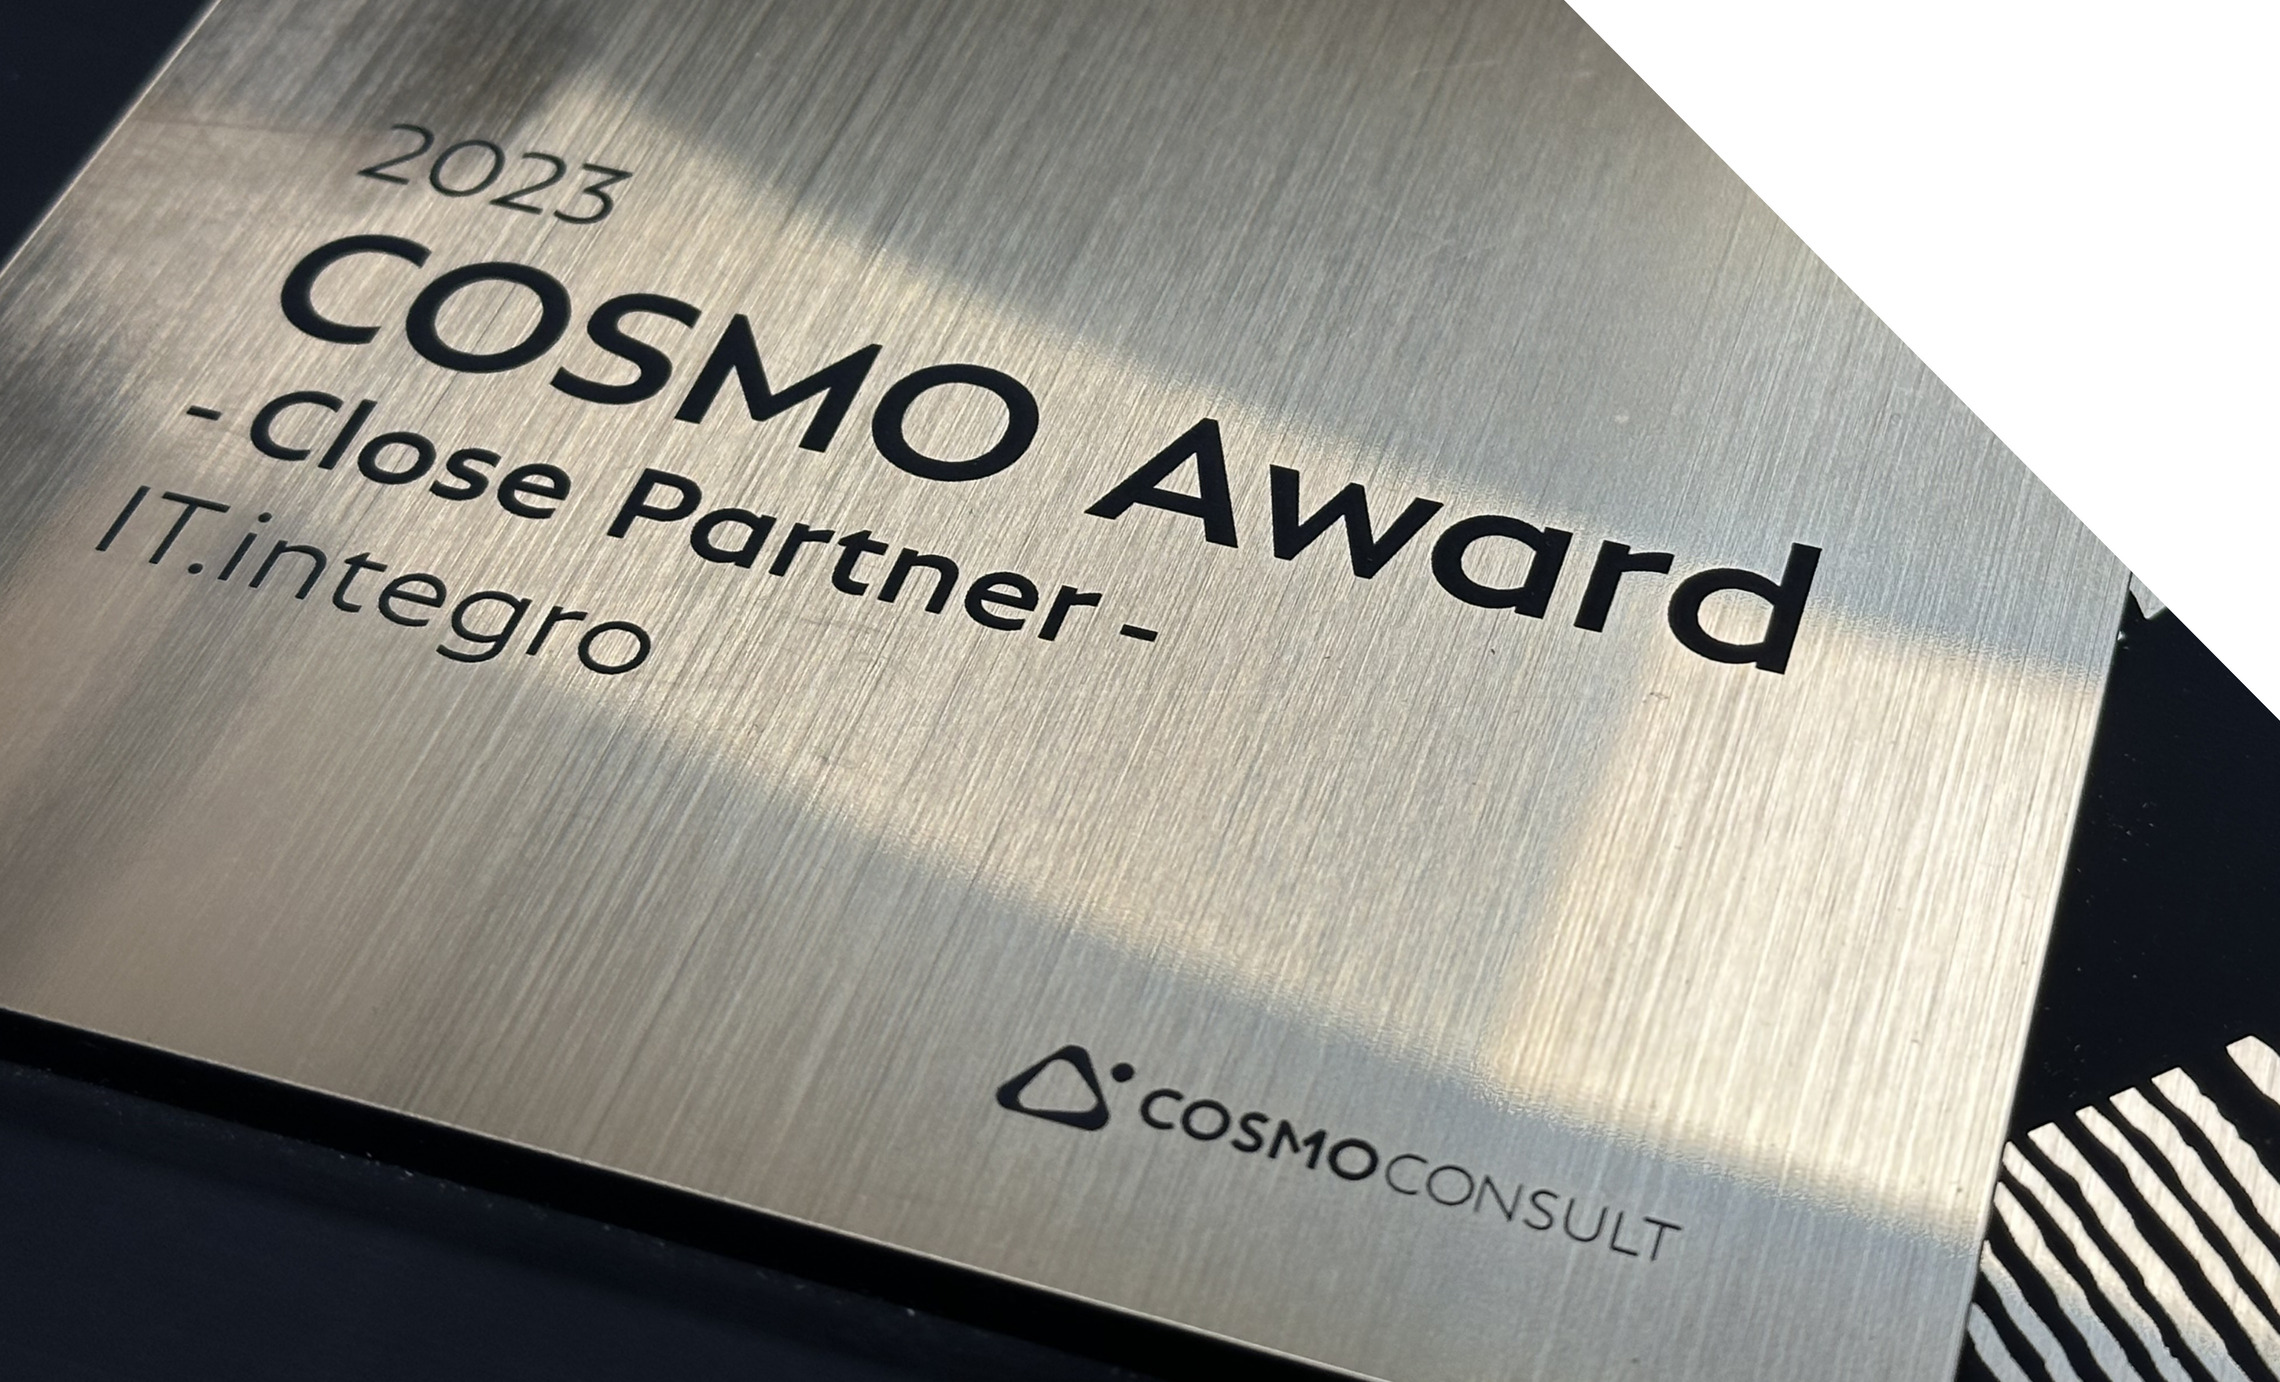 Nagroda COSMO CONSULT dla IT.integro